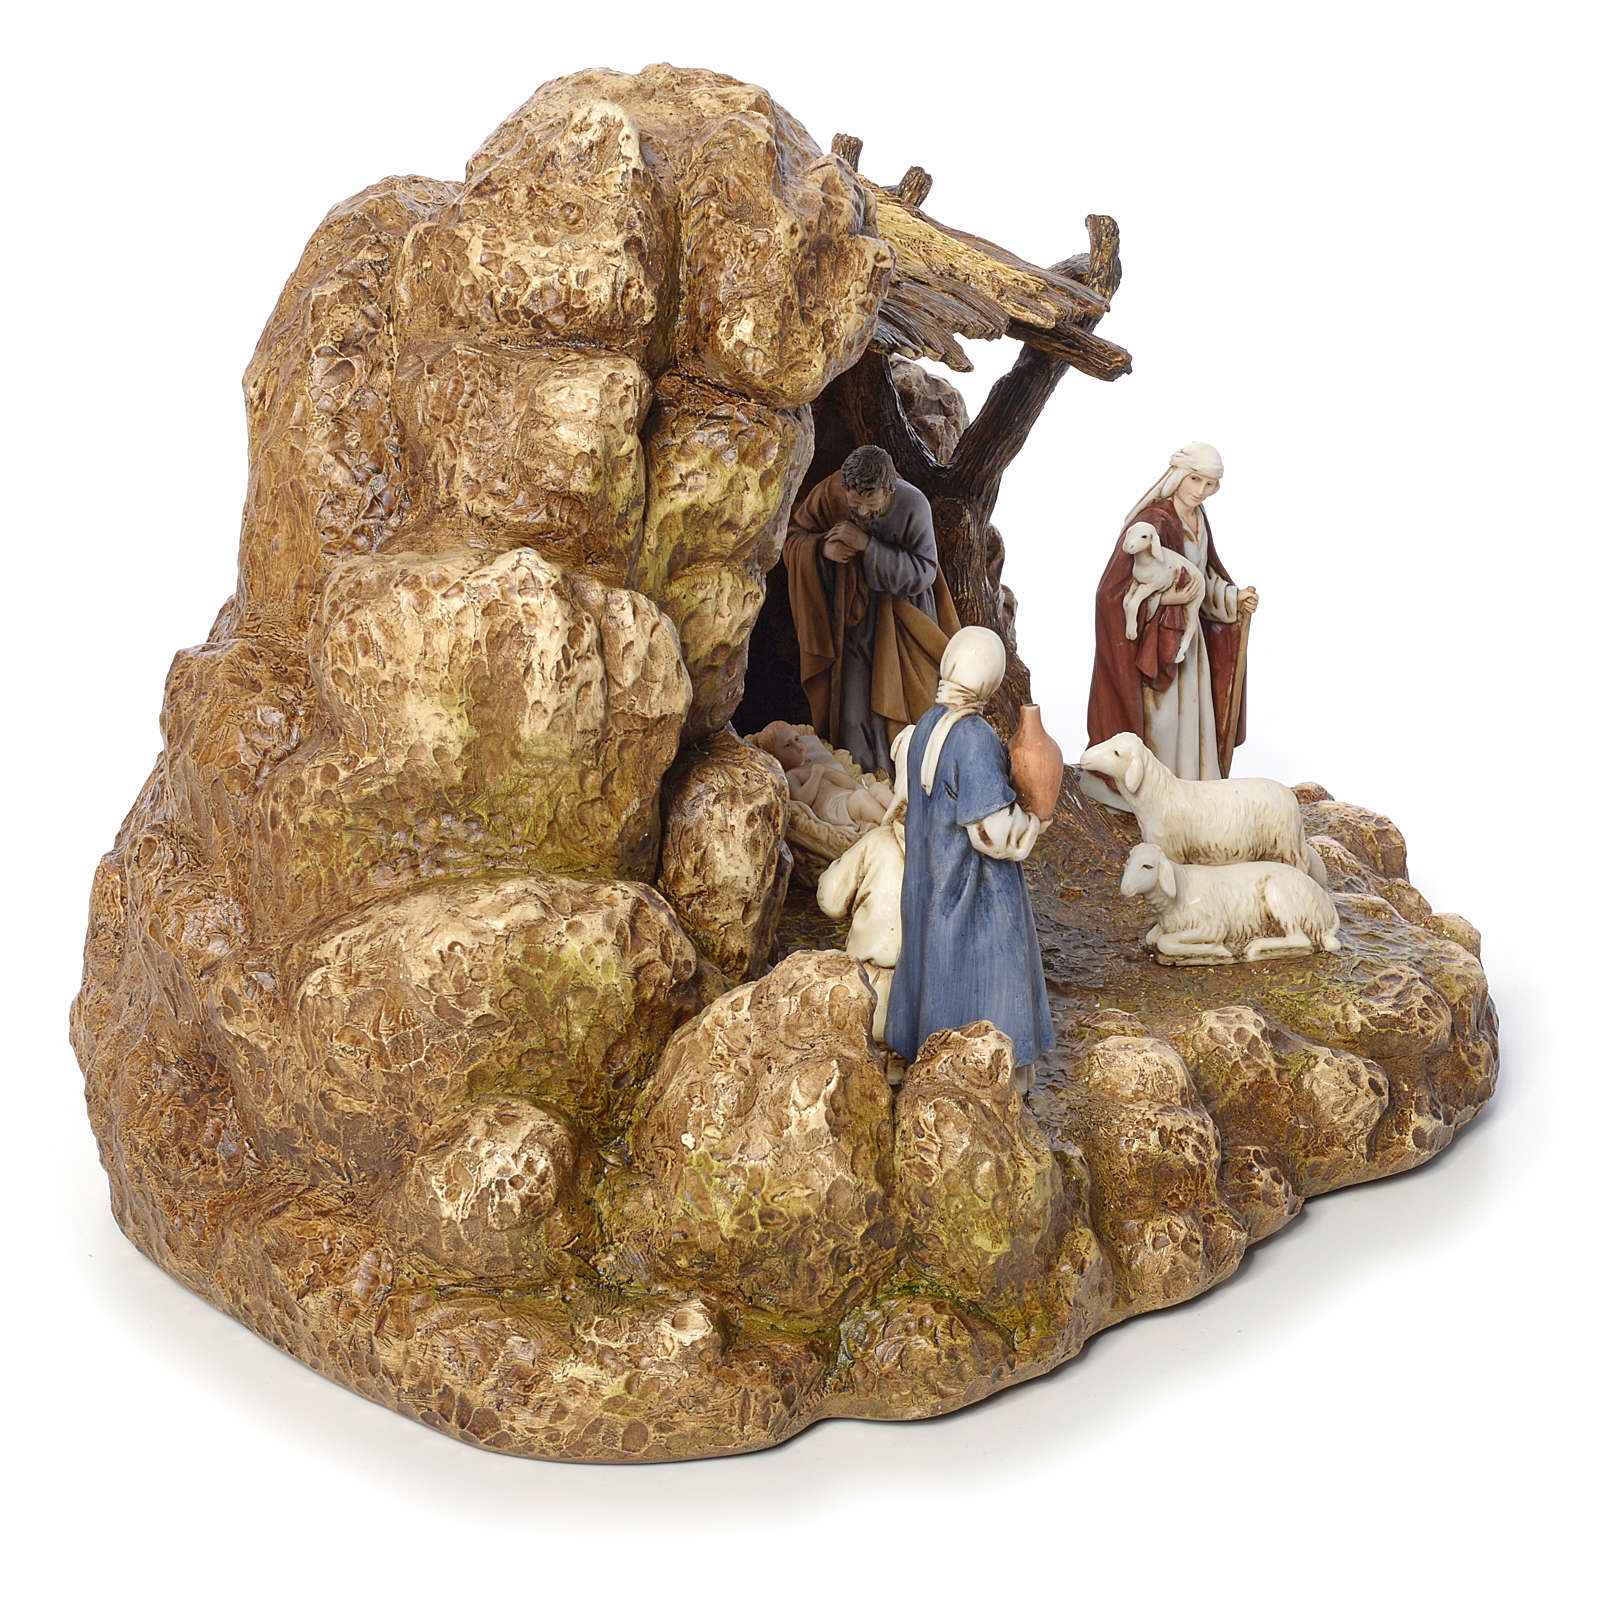 Nativity scene with stable by Landi, 11cm | online sales on HOLYART.co.uk